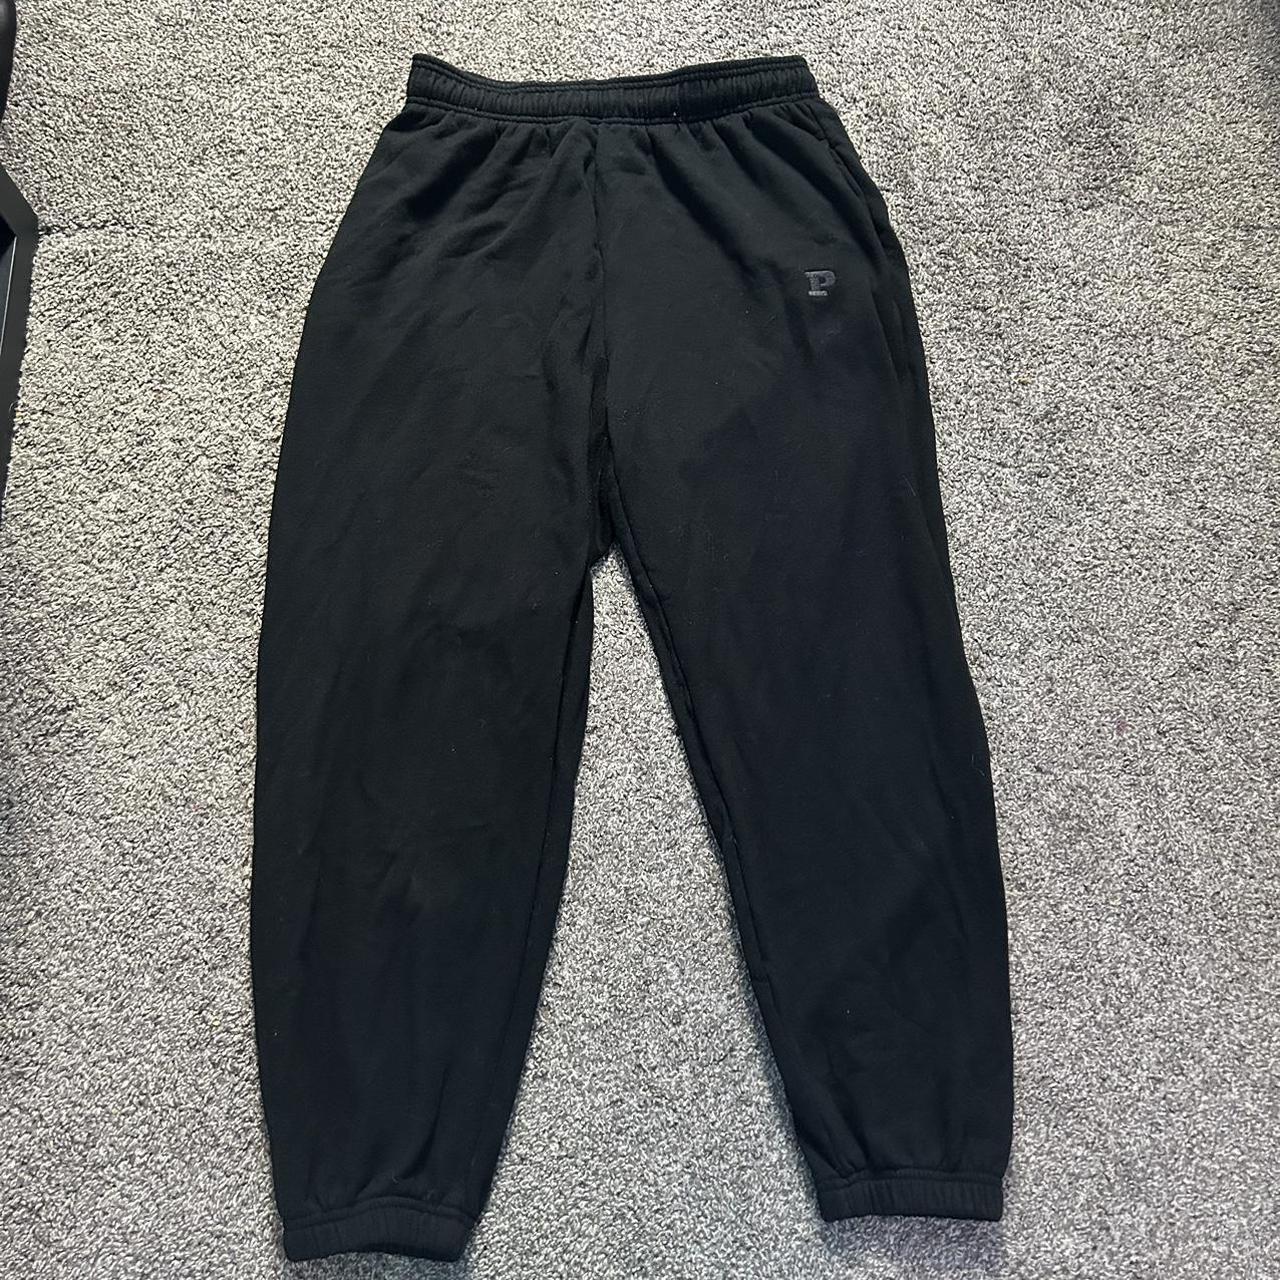 PINK brand black sweat pants